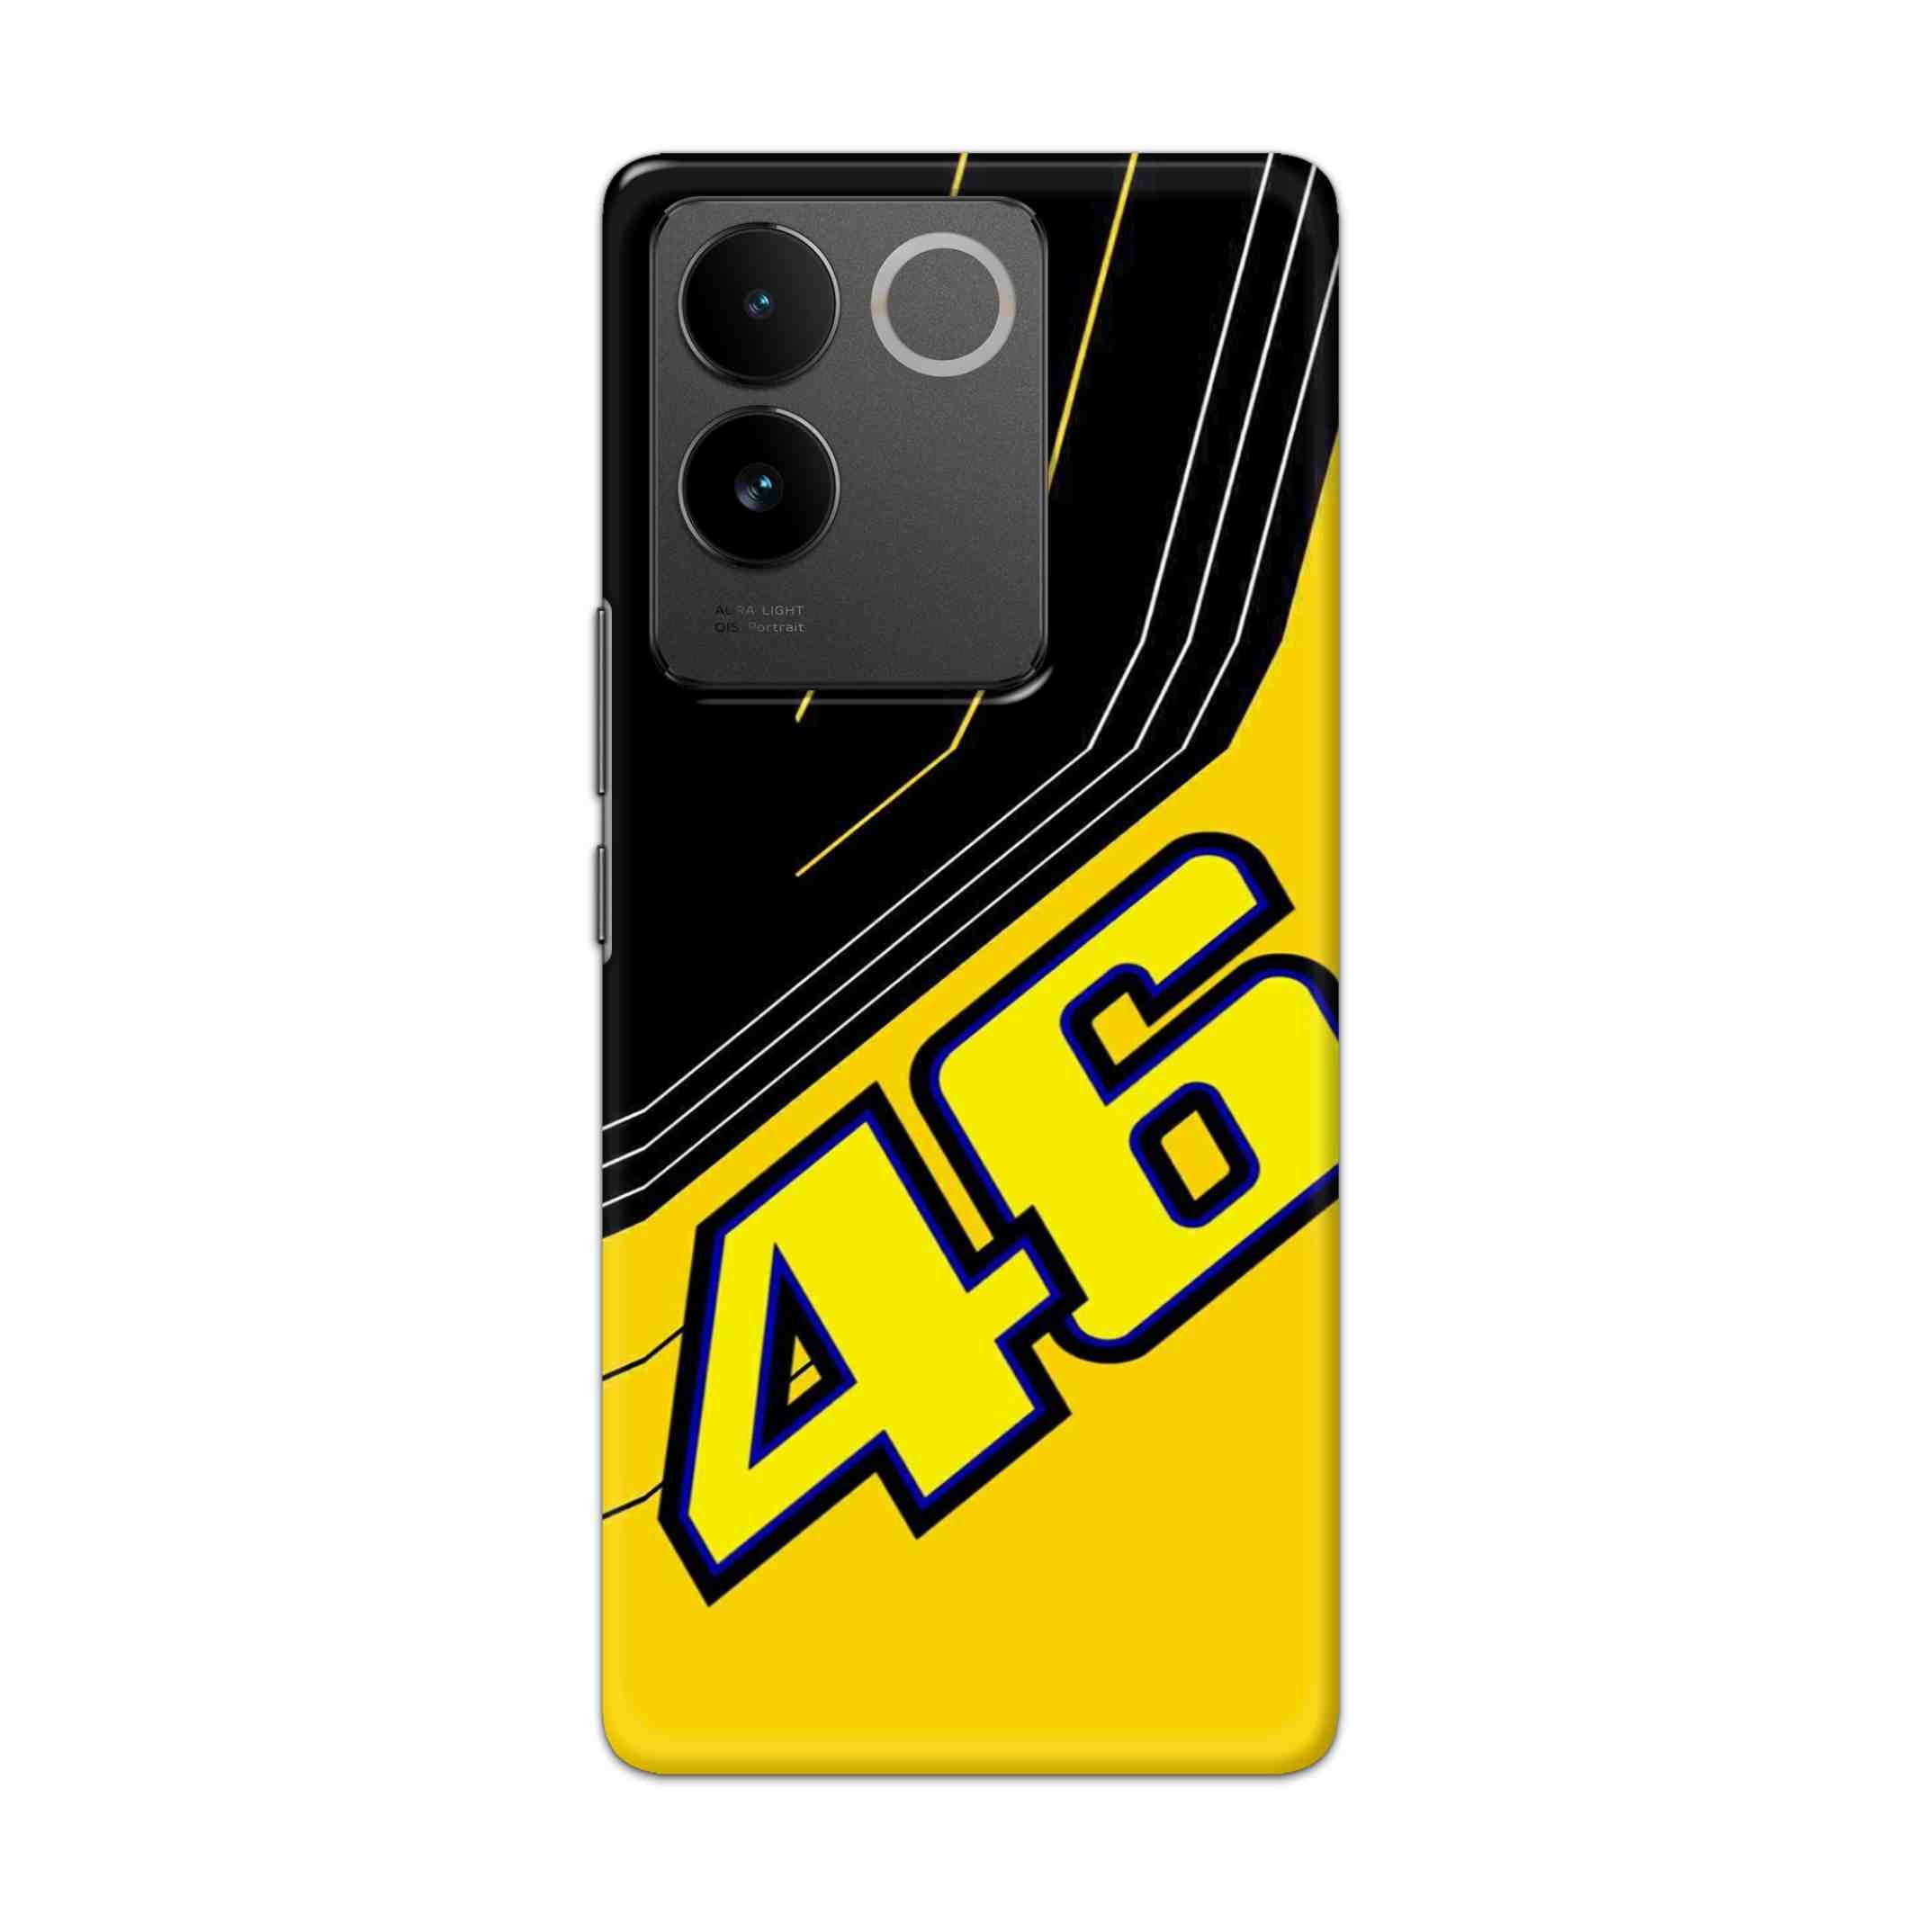 Buy 46 Hard Back Mobile Phone Case/Cover For vivo T2 Pro 5G Online